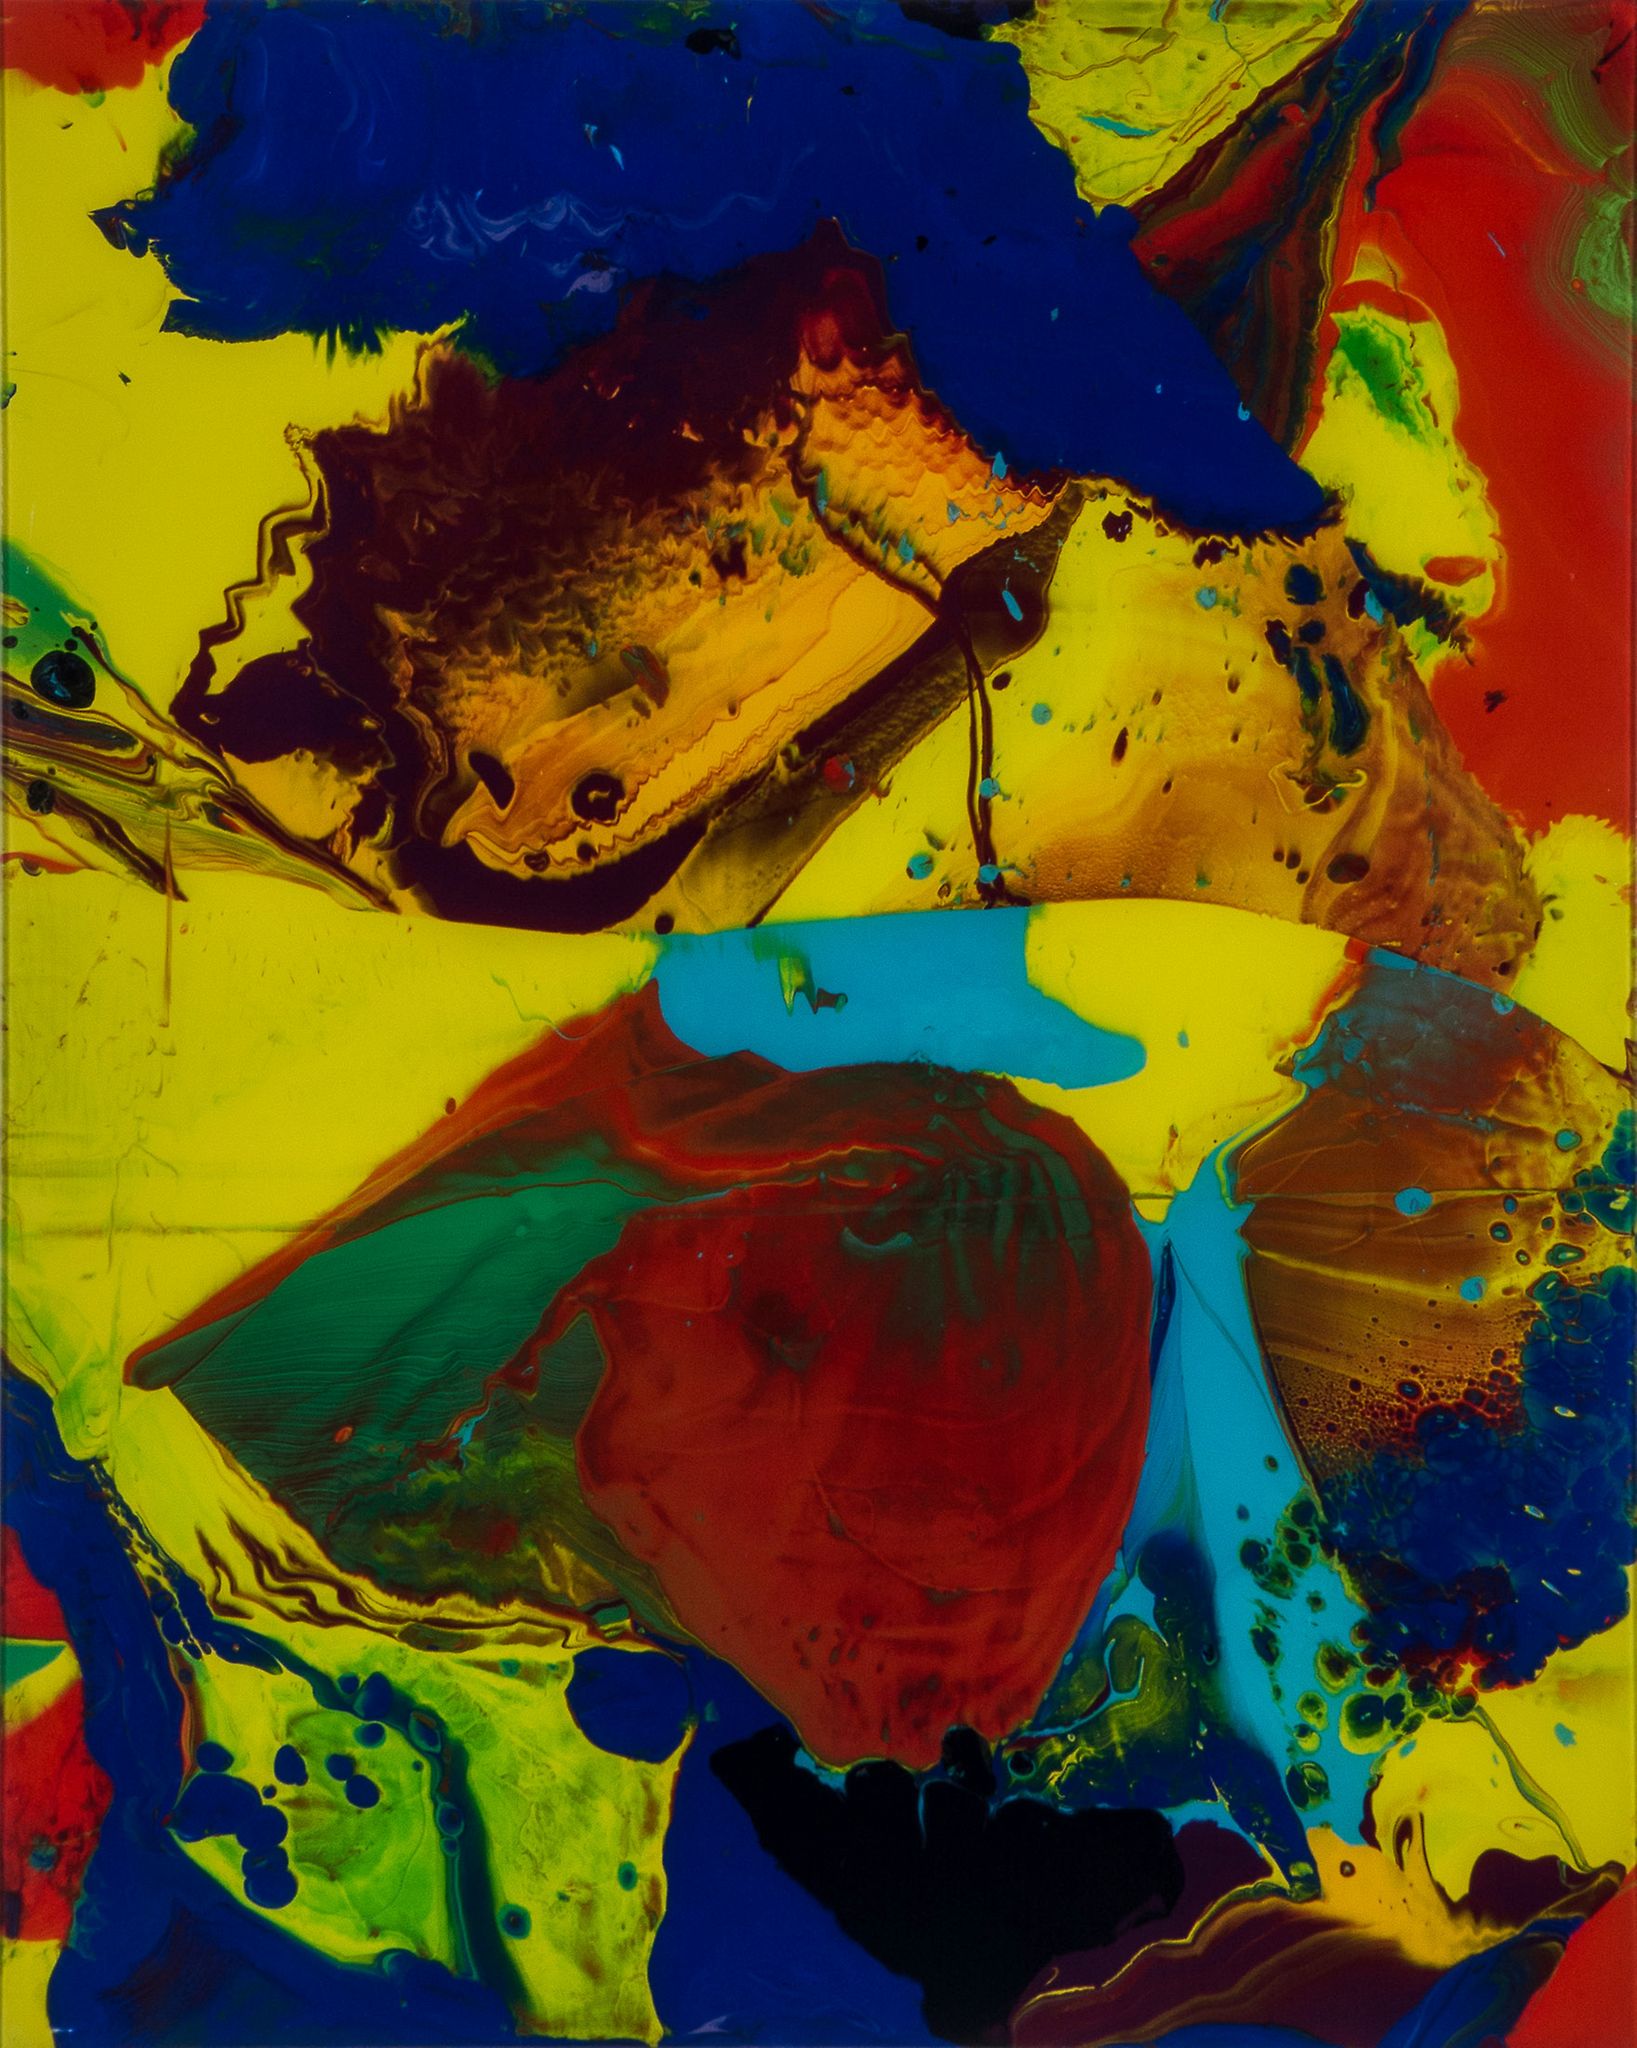 Gerhard Richter (b.1932) - Bagdad diasec-mounted chromogenic print on aluminium, 2014, numbered on